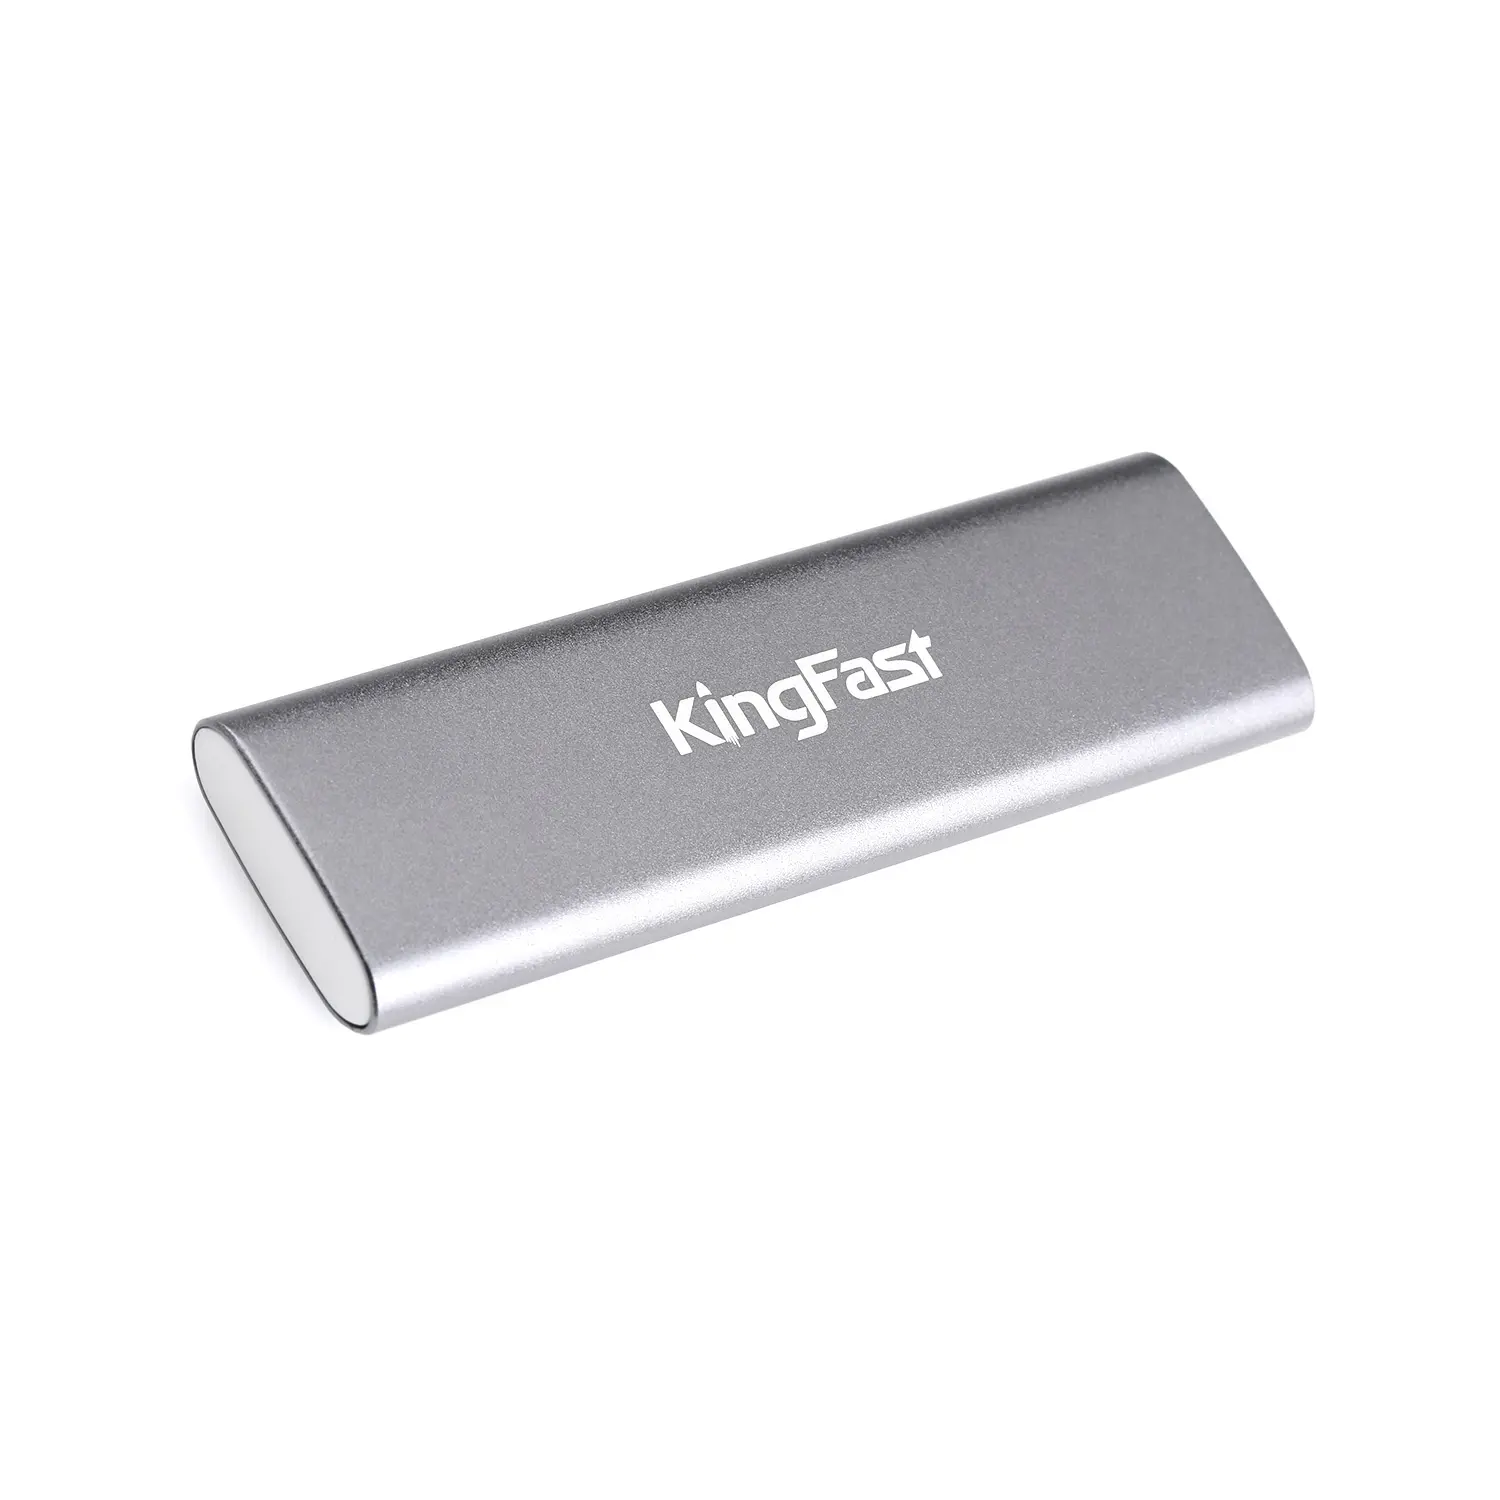 Kingfast external 128 gb 256 512 512 gb 2tb 4 tb SSD Hard Drive 3.0 portable for Laptop Desktop PC